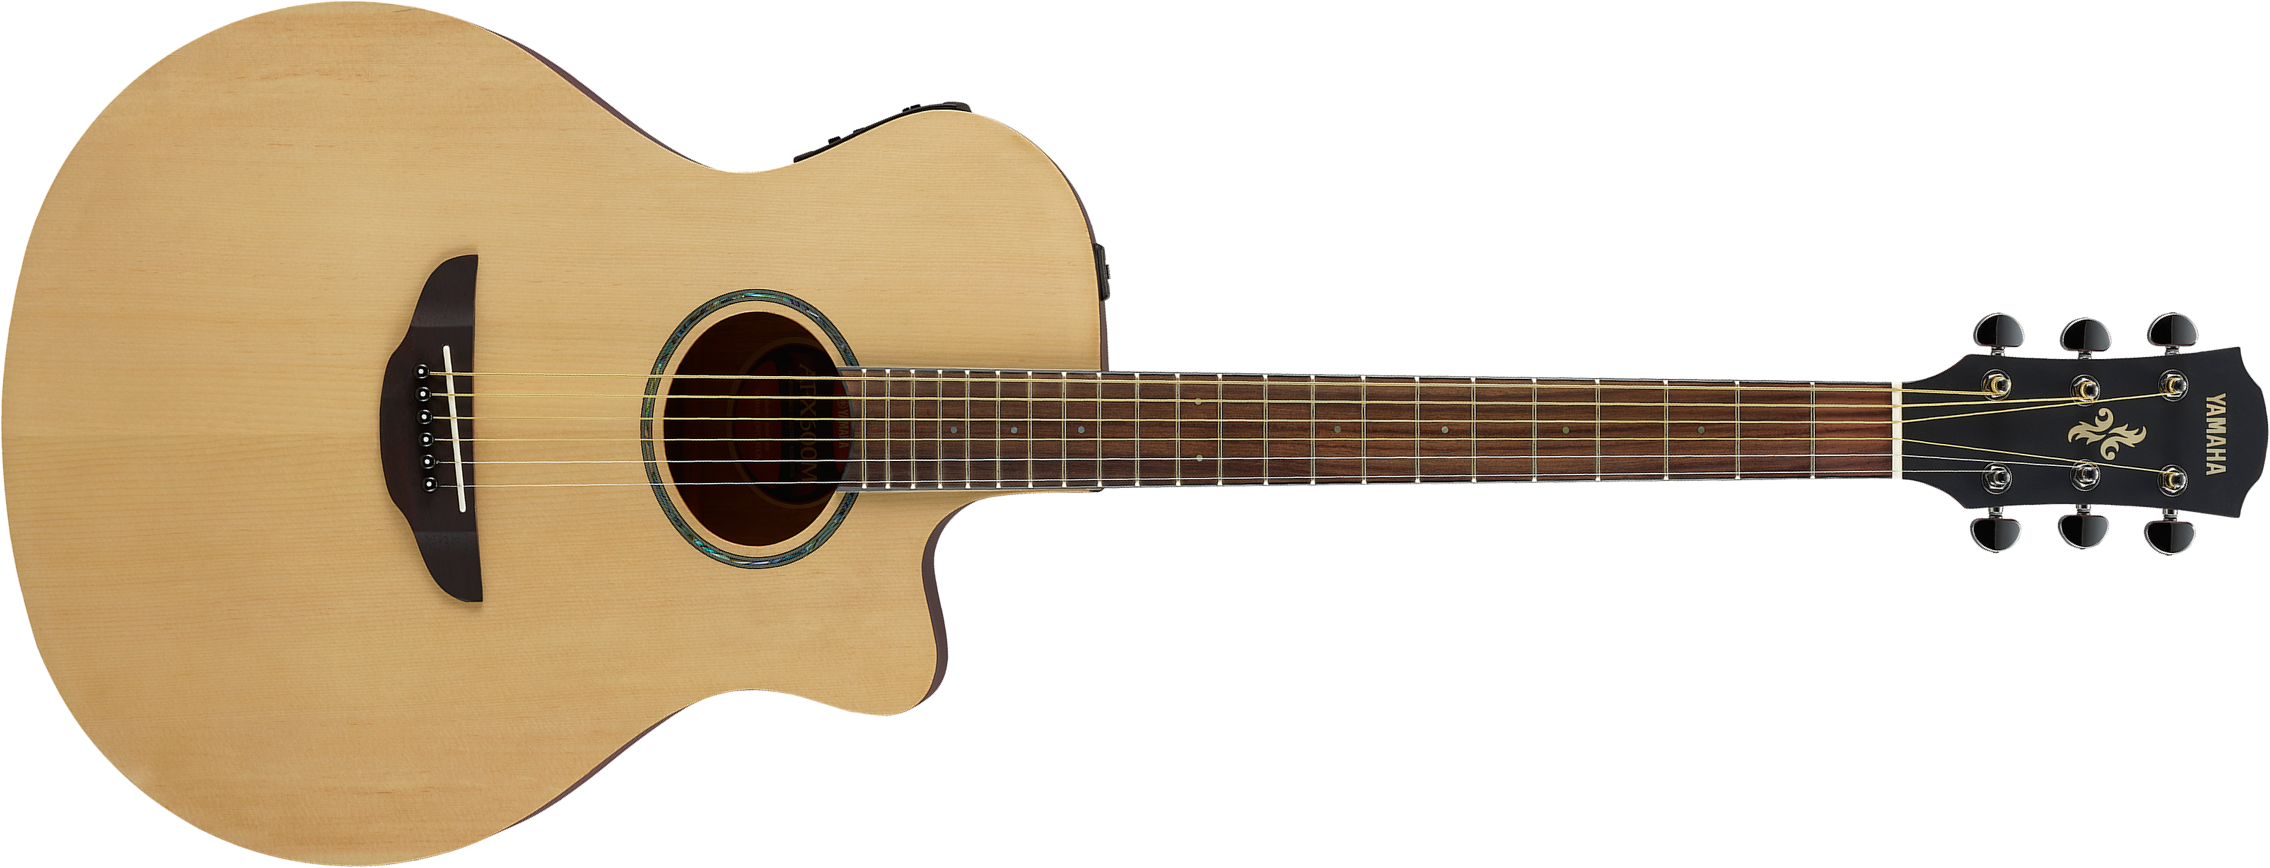 Yamaha Apx600m Concert Slim Cw Erable Nato Rw - Natural Satin - Electro acoustic guitar - Main picture